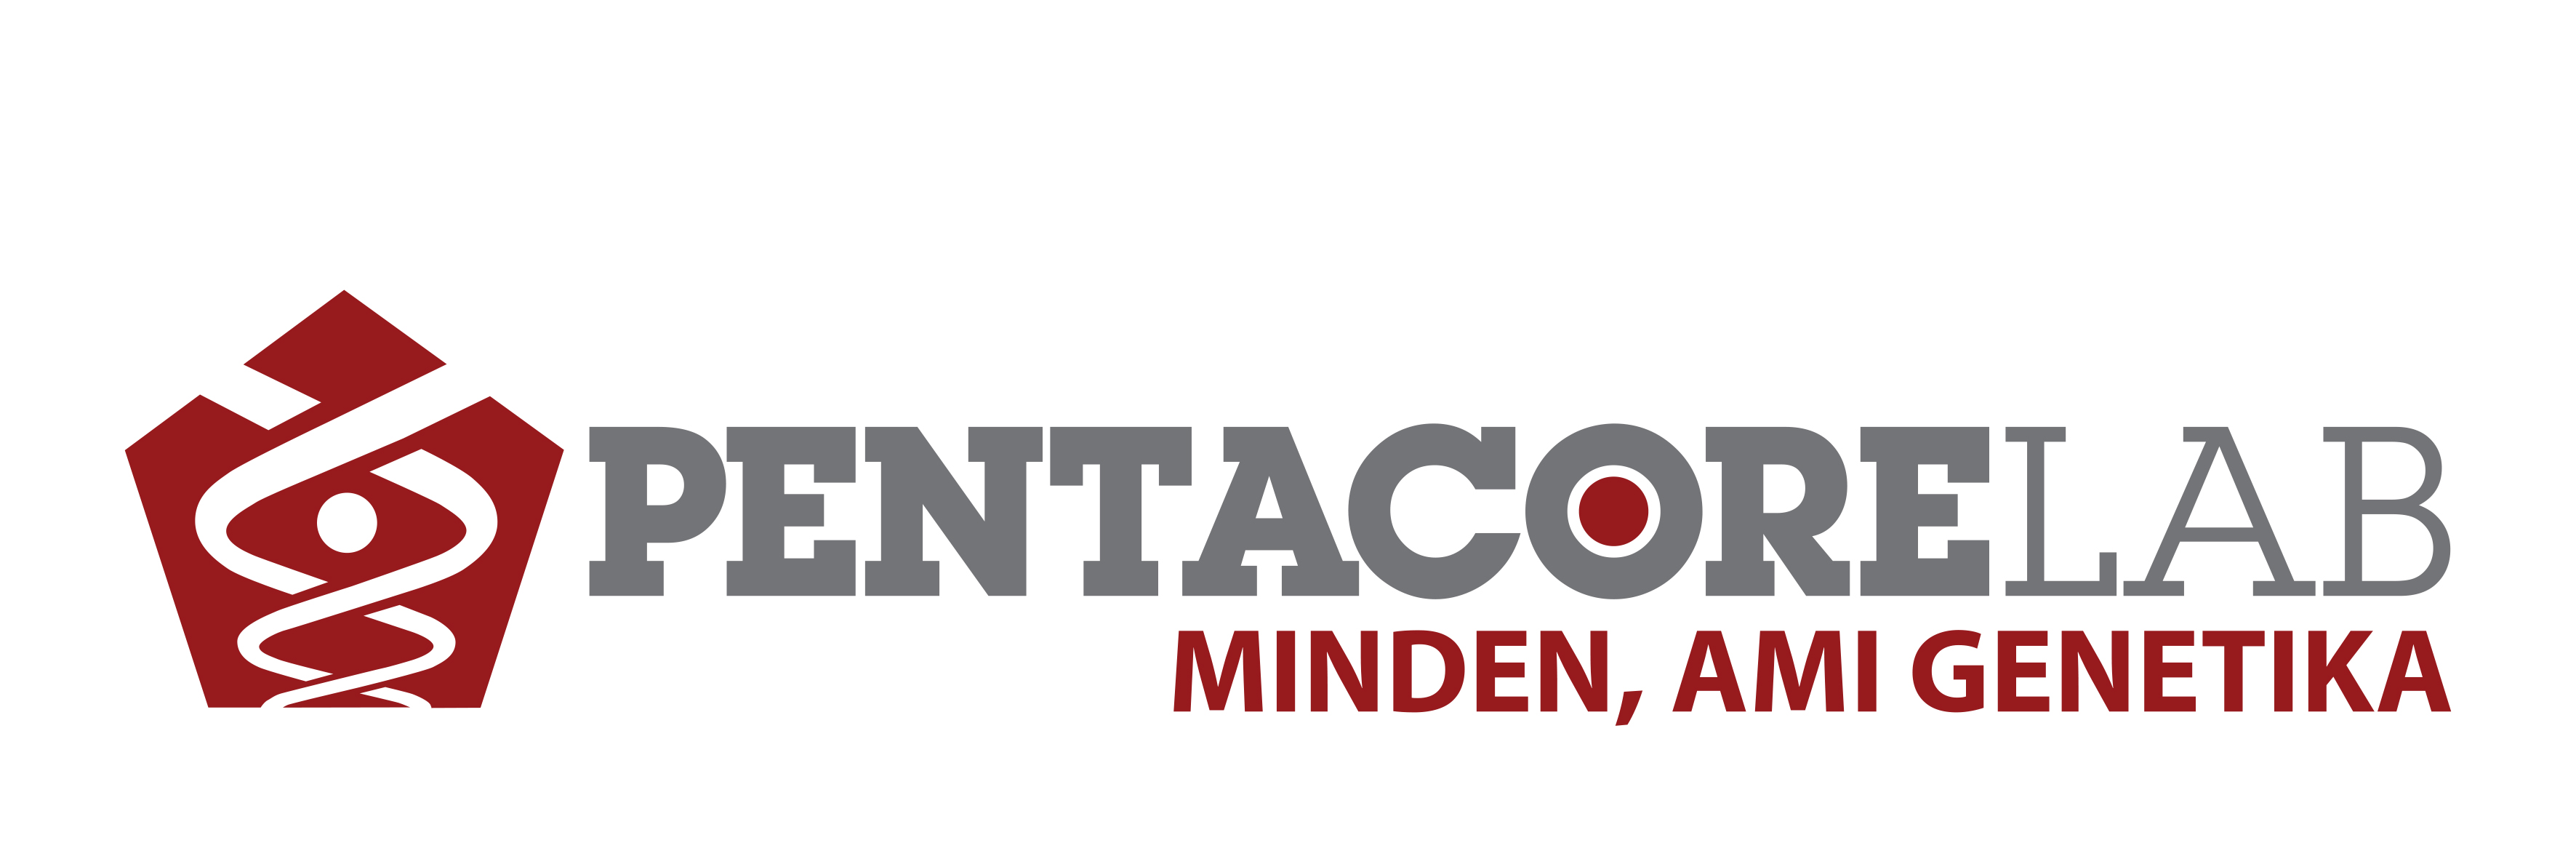 pentacore logo egysor